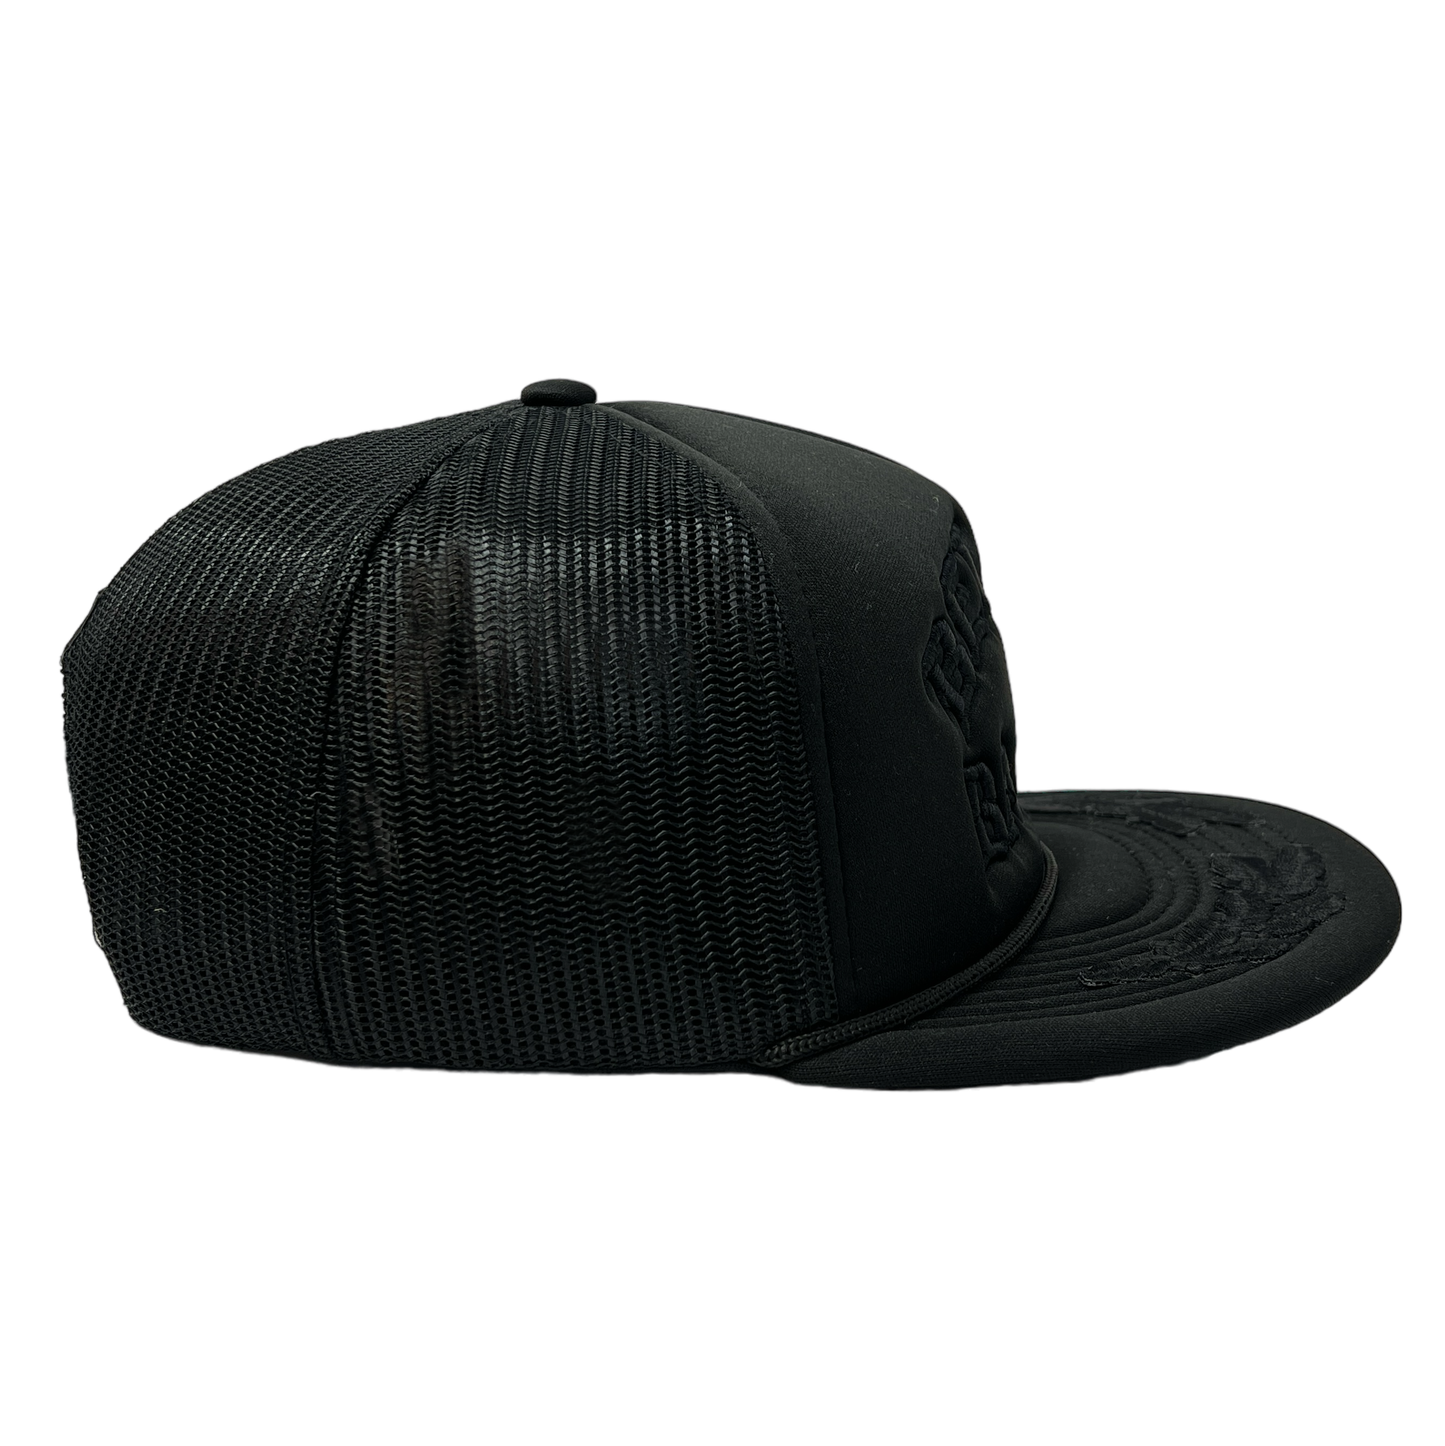 Bel Air Bandits Trucker Hat